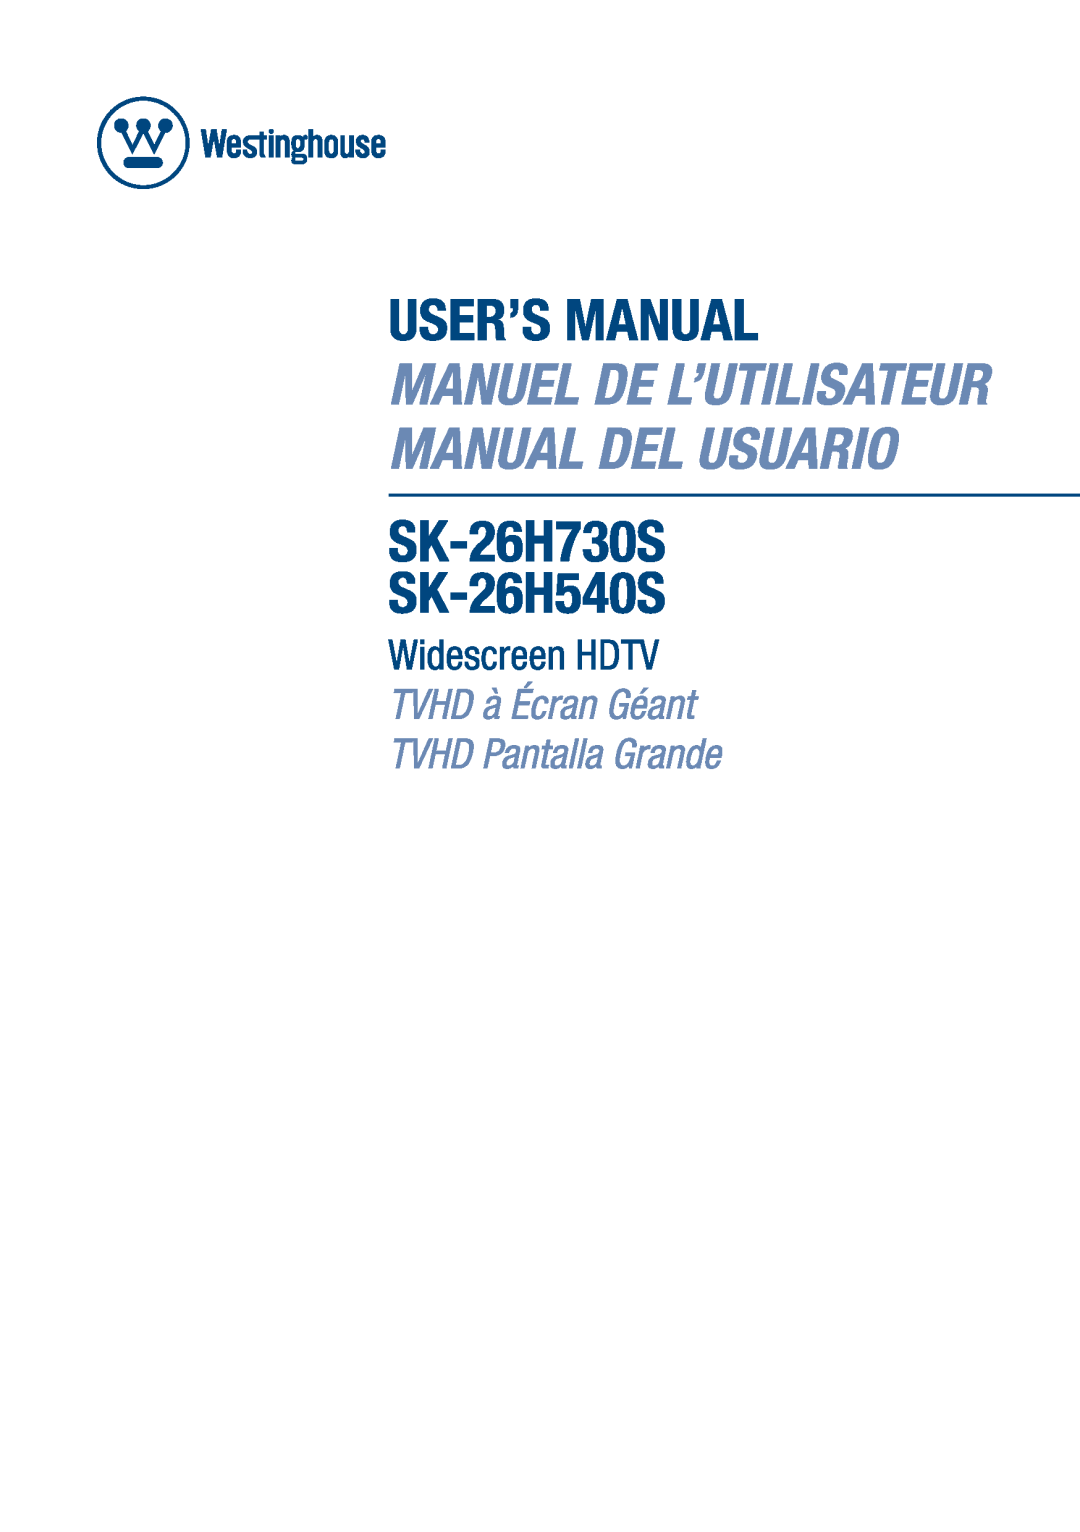 Westinghouse SK-26H540S, SK-26H730S manual 